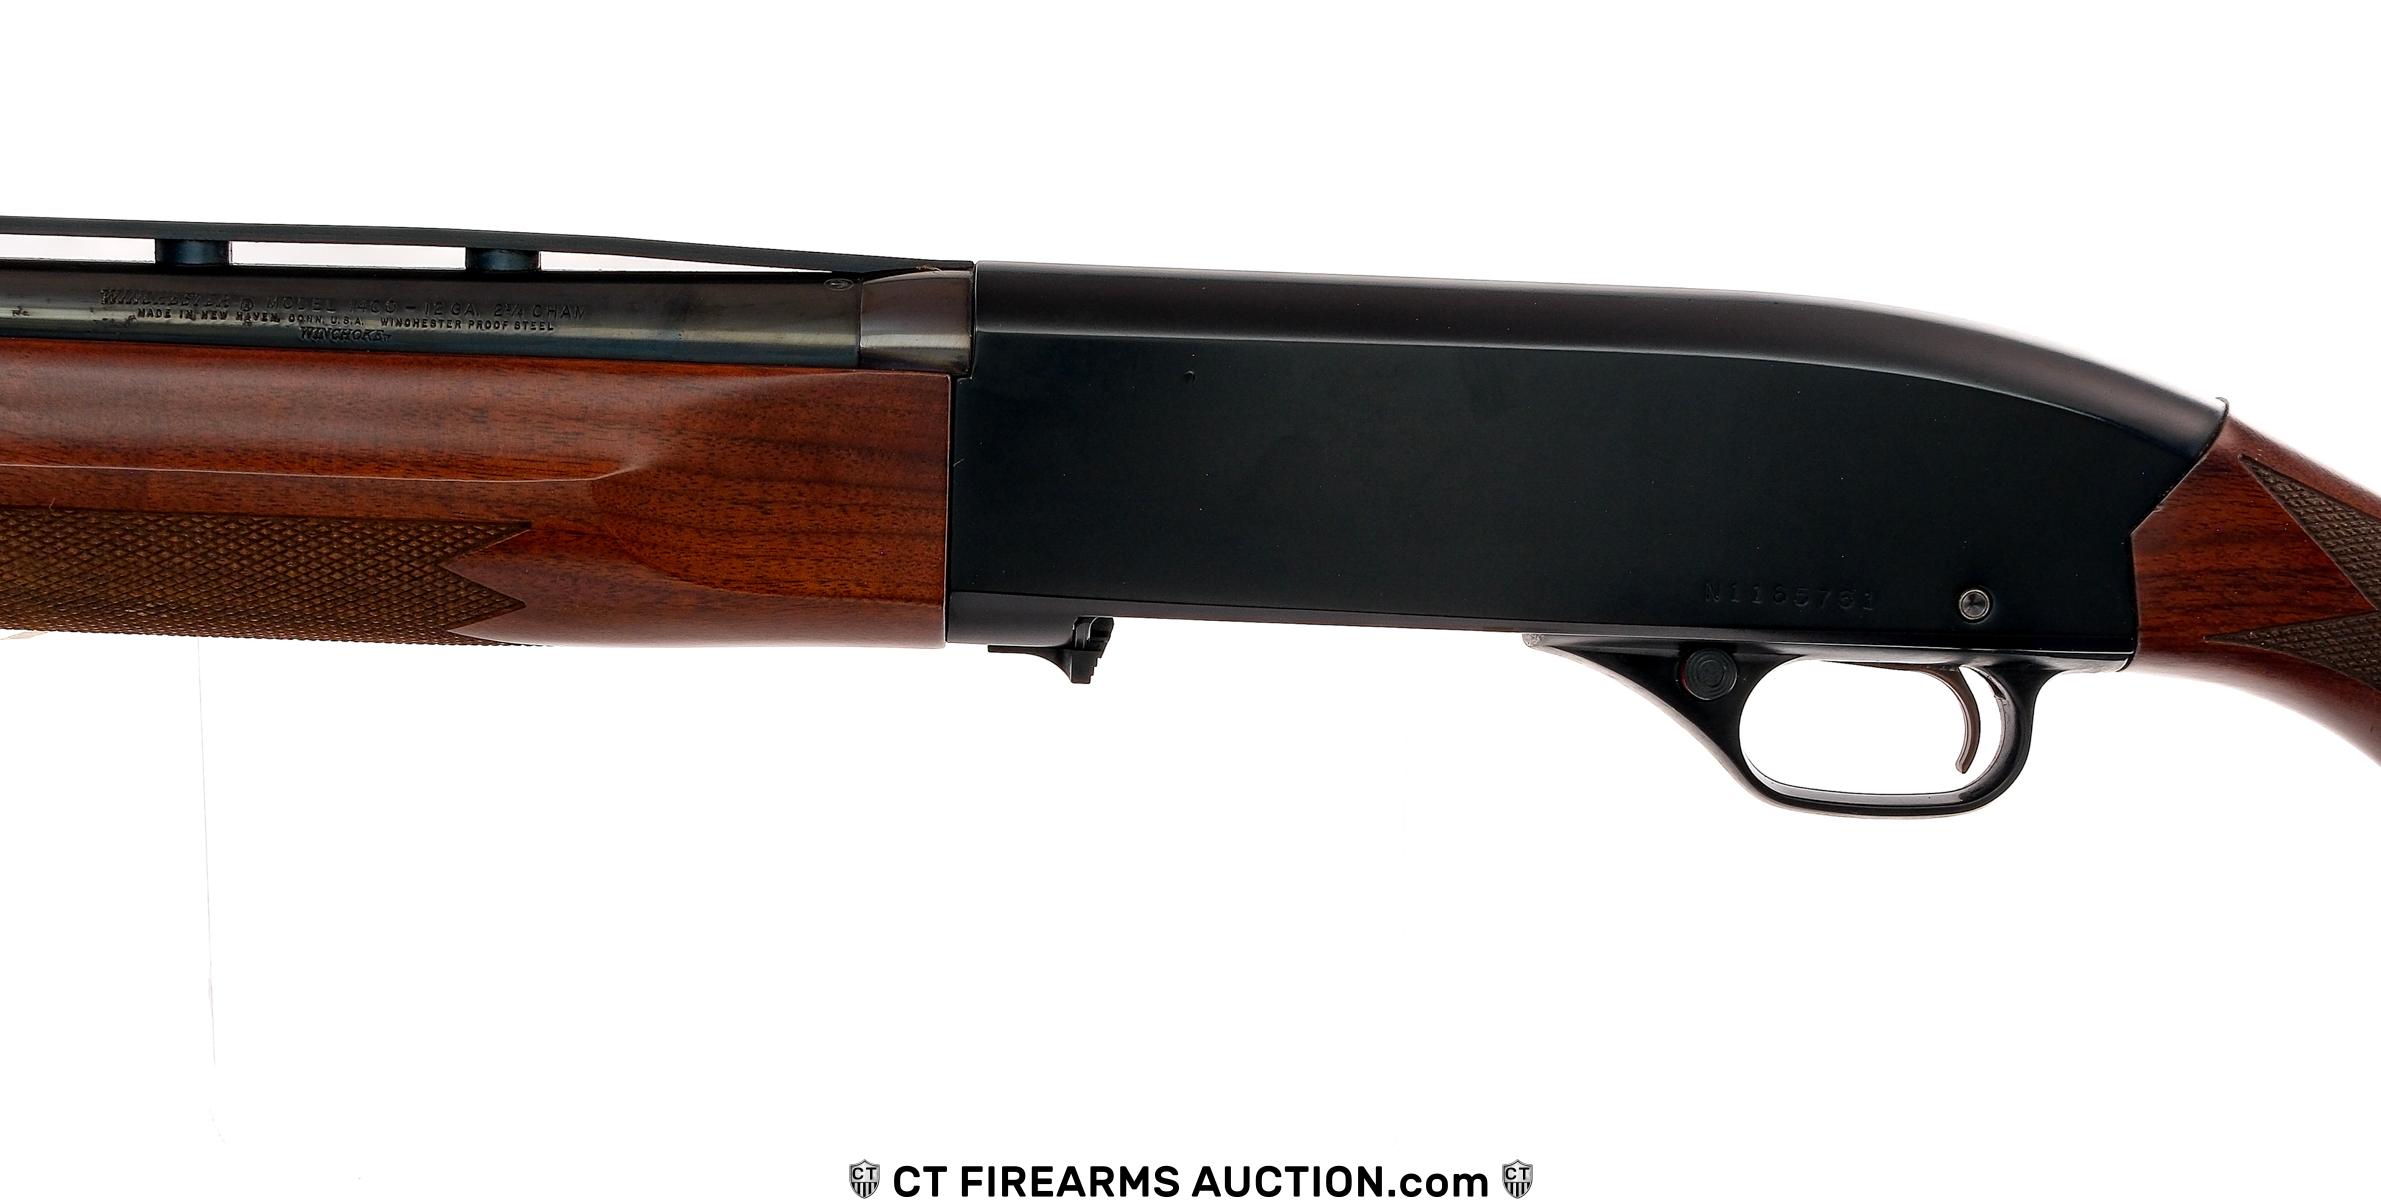 Winchester 1400 12Ga Semi Auto Shotgun